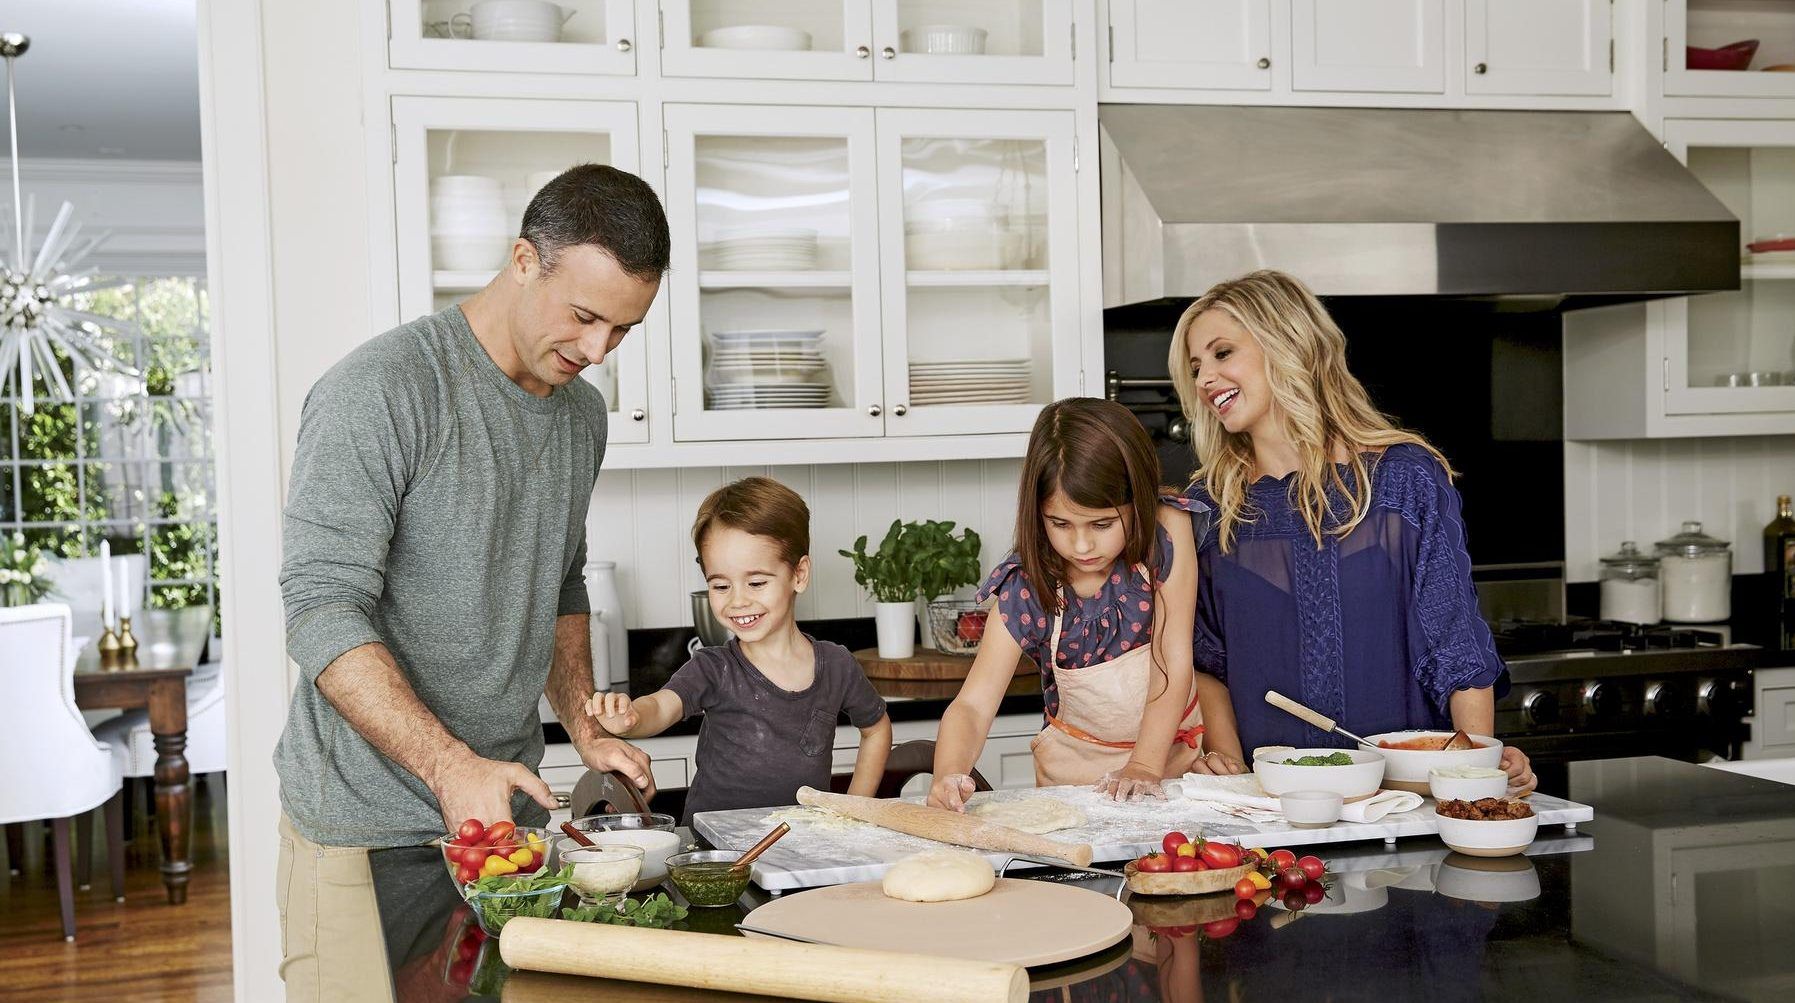 Freddie Prinze Jr and Family in Kitchen